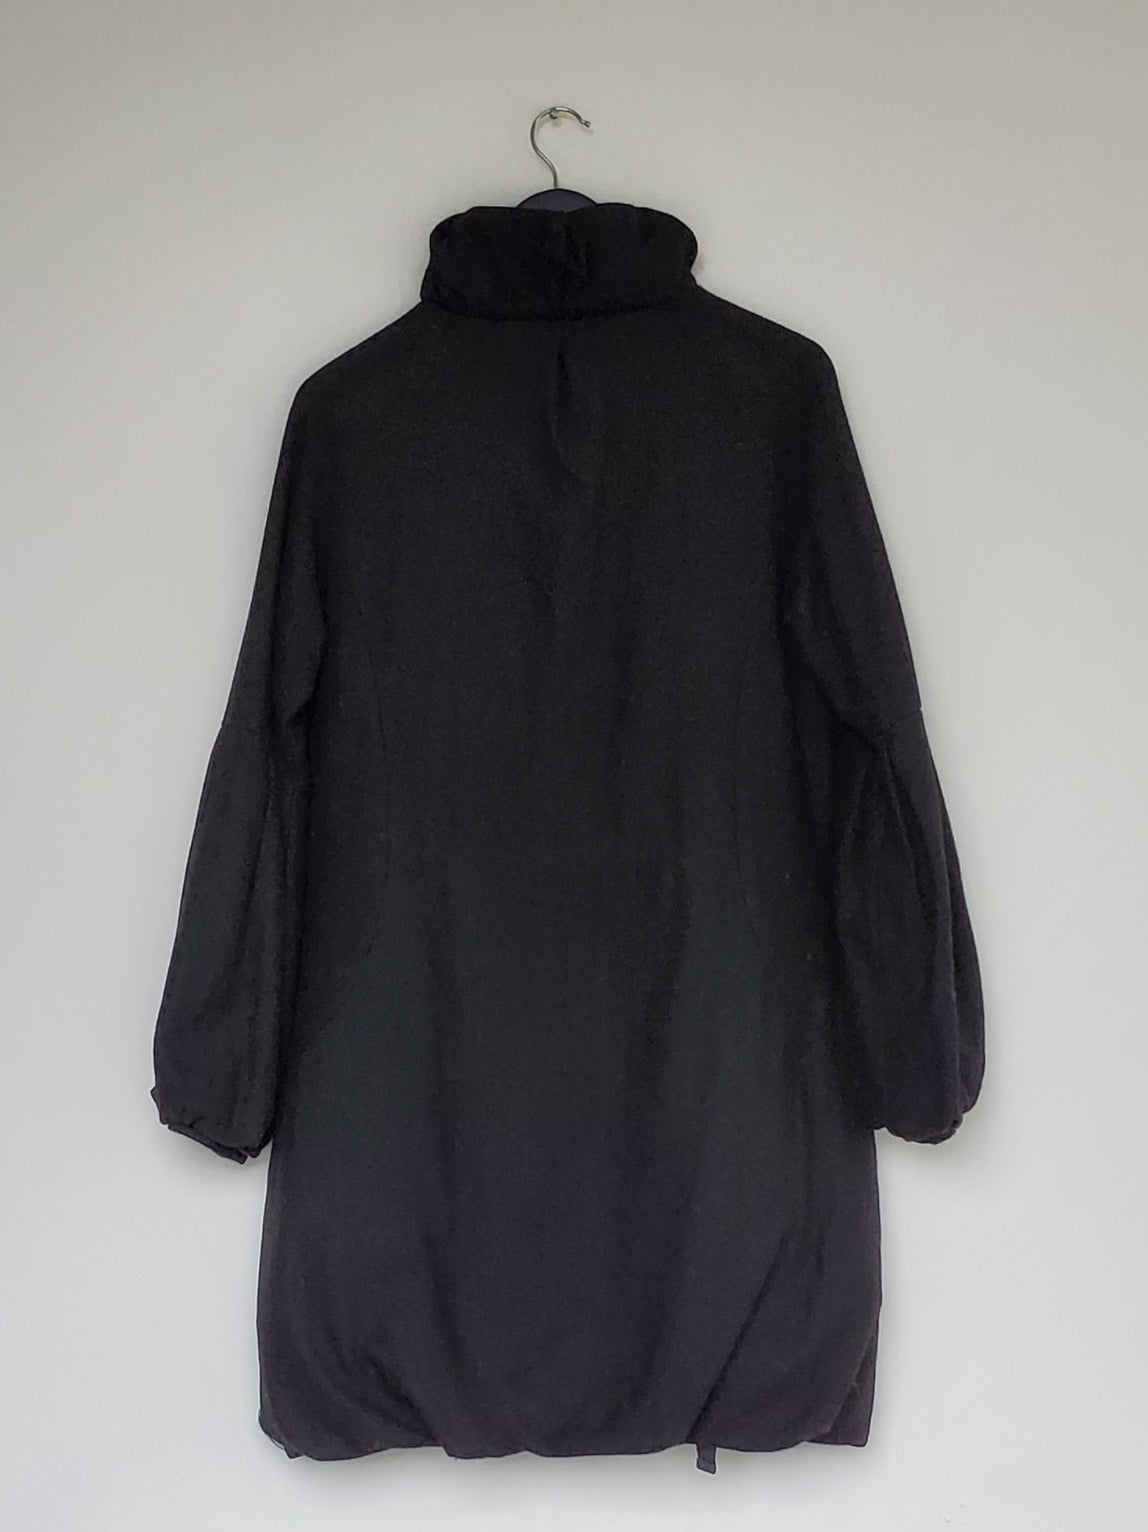 Black Wool Puff Sleeve Coat (M/L)